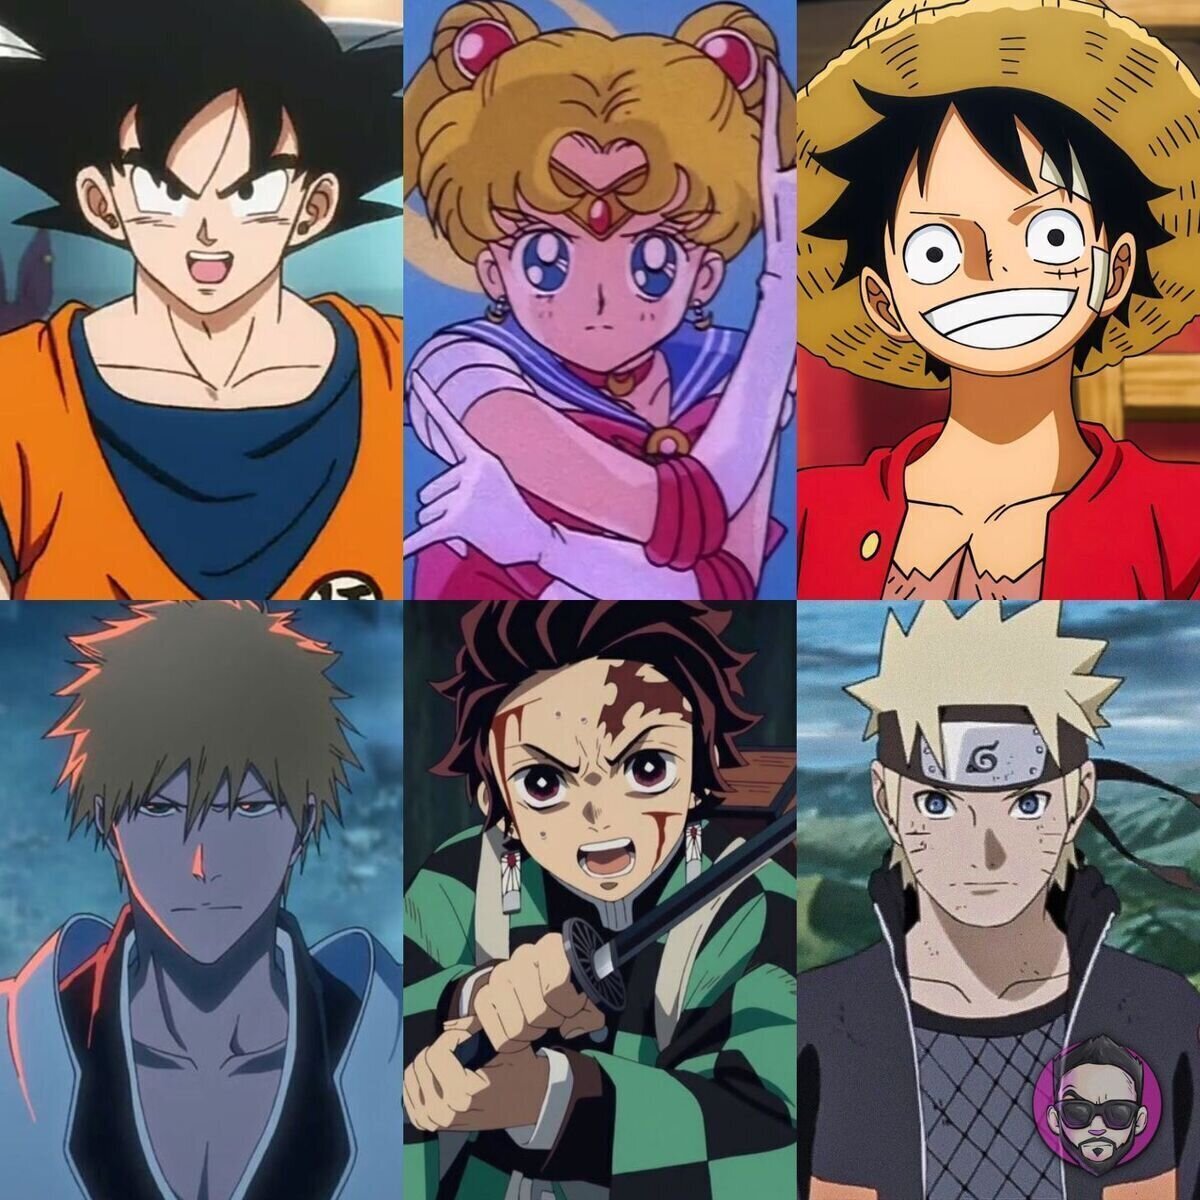 Comenta tu TOP 3 de personajes favoritos de anime